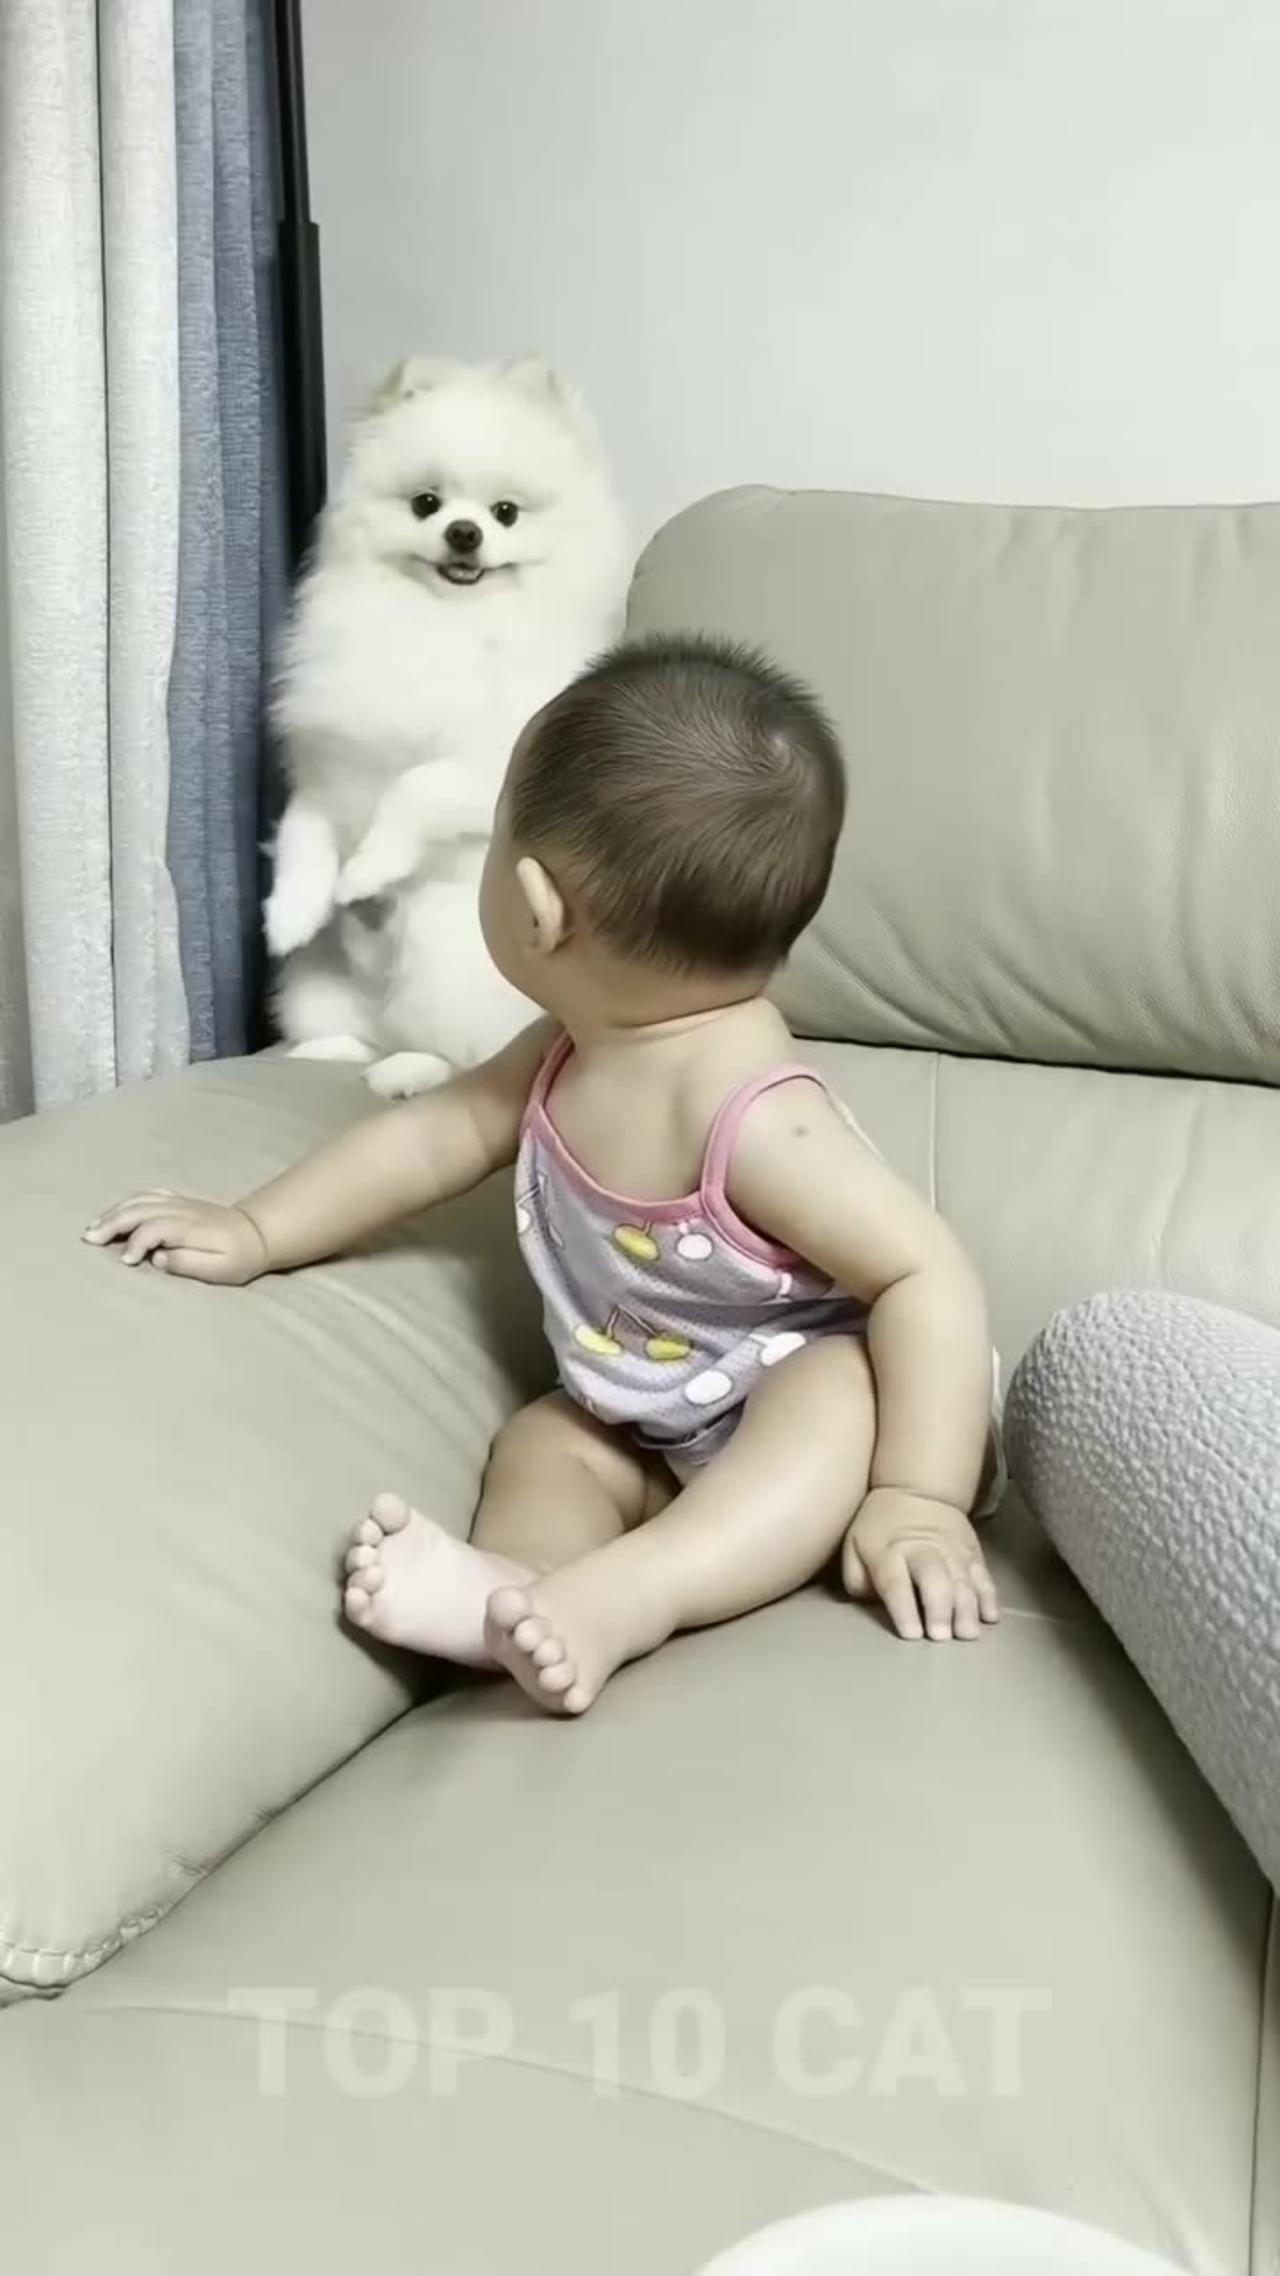 Cute dog and cute baby